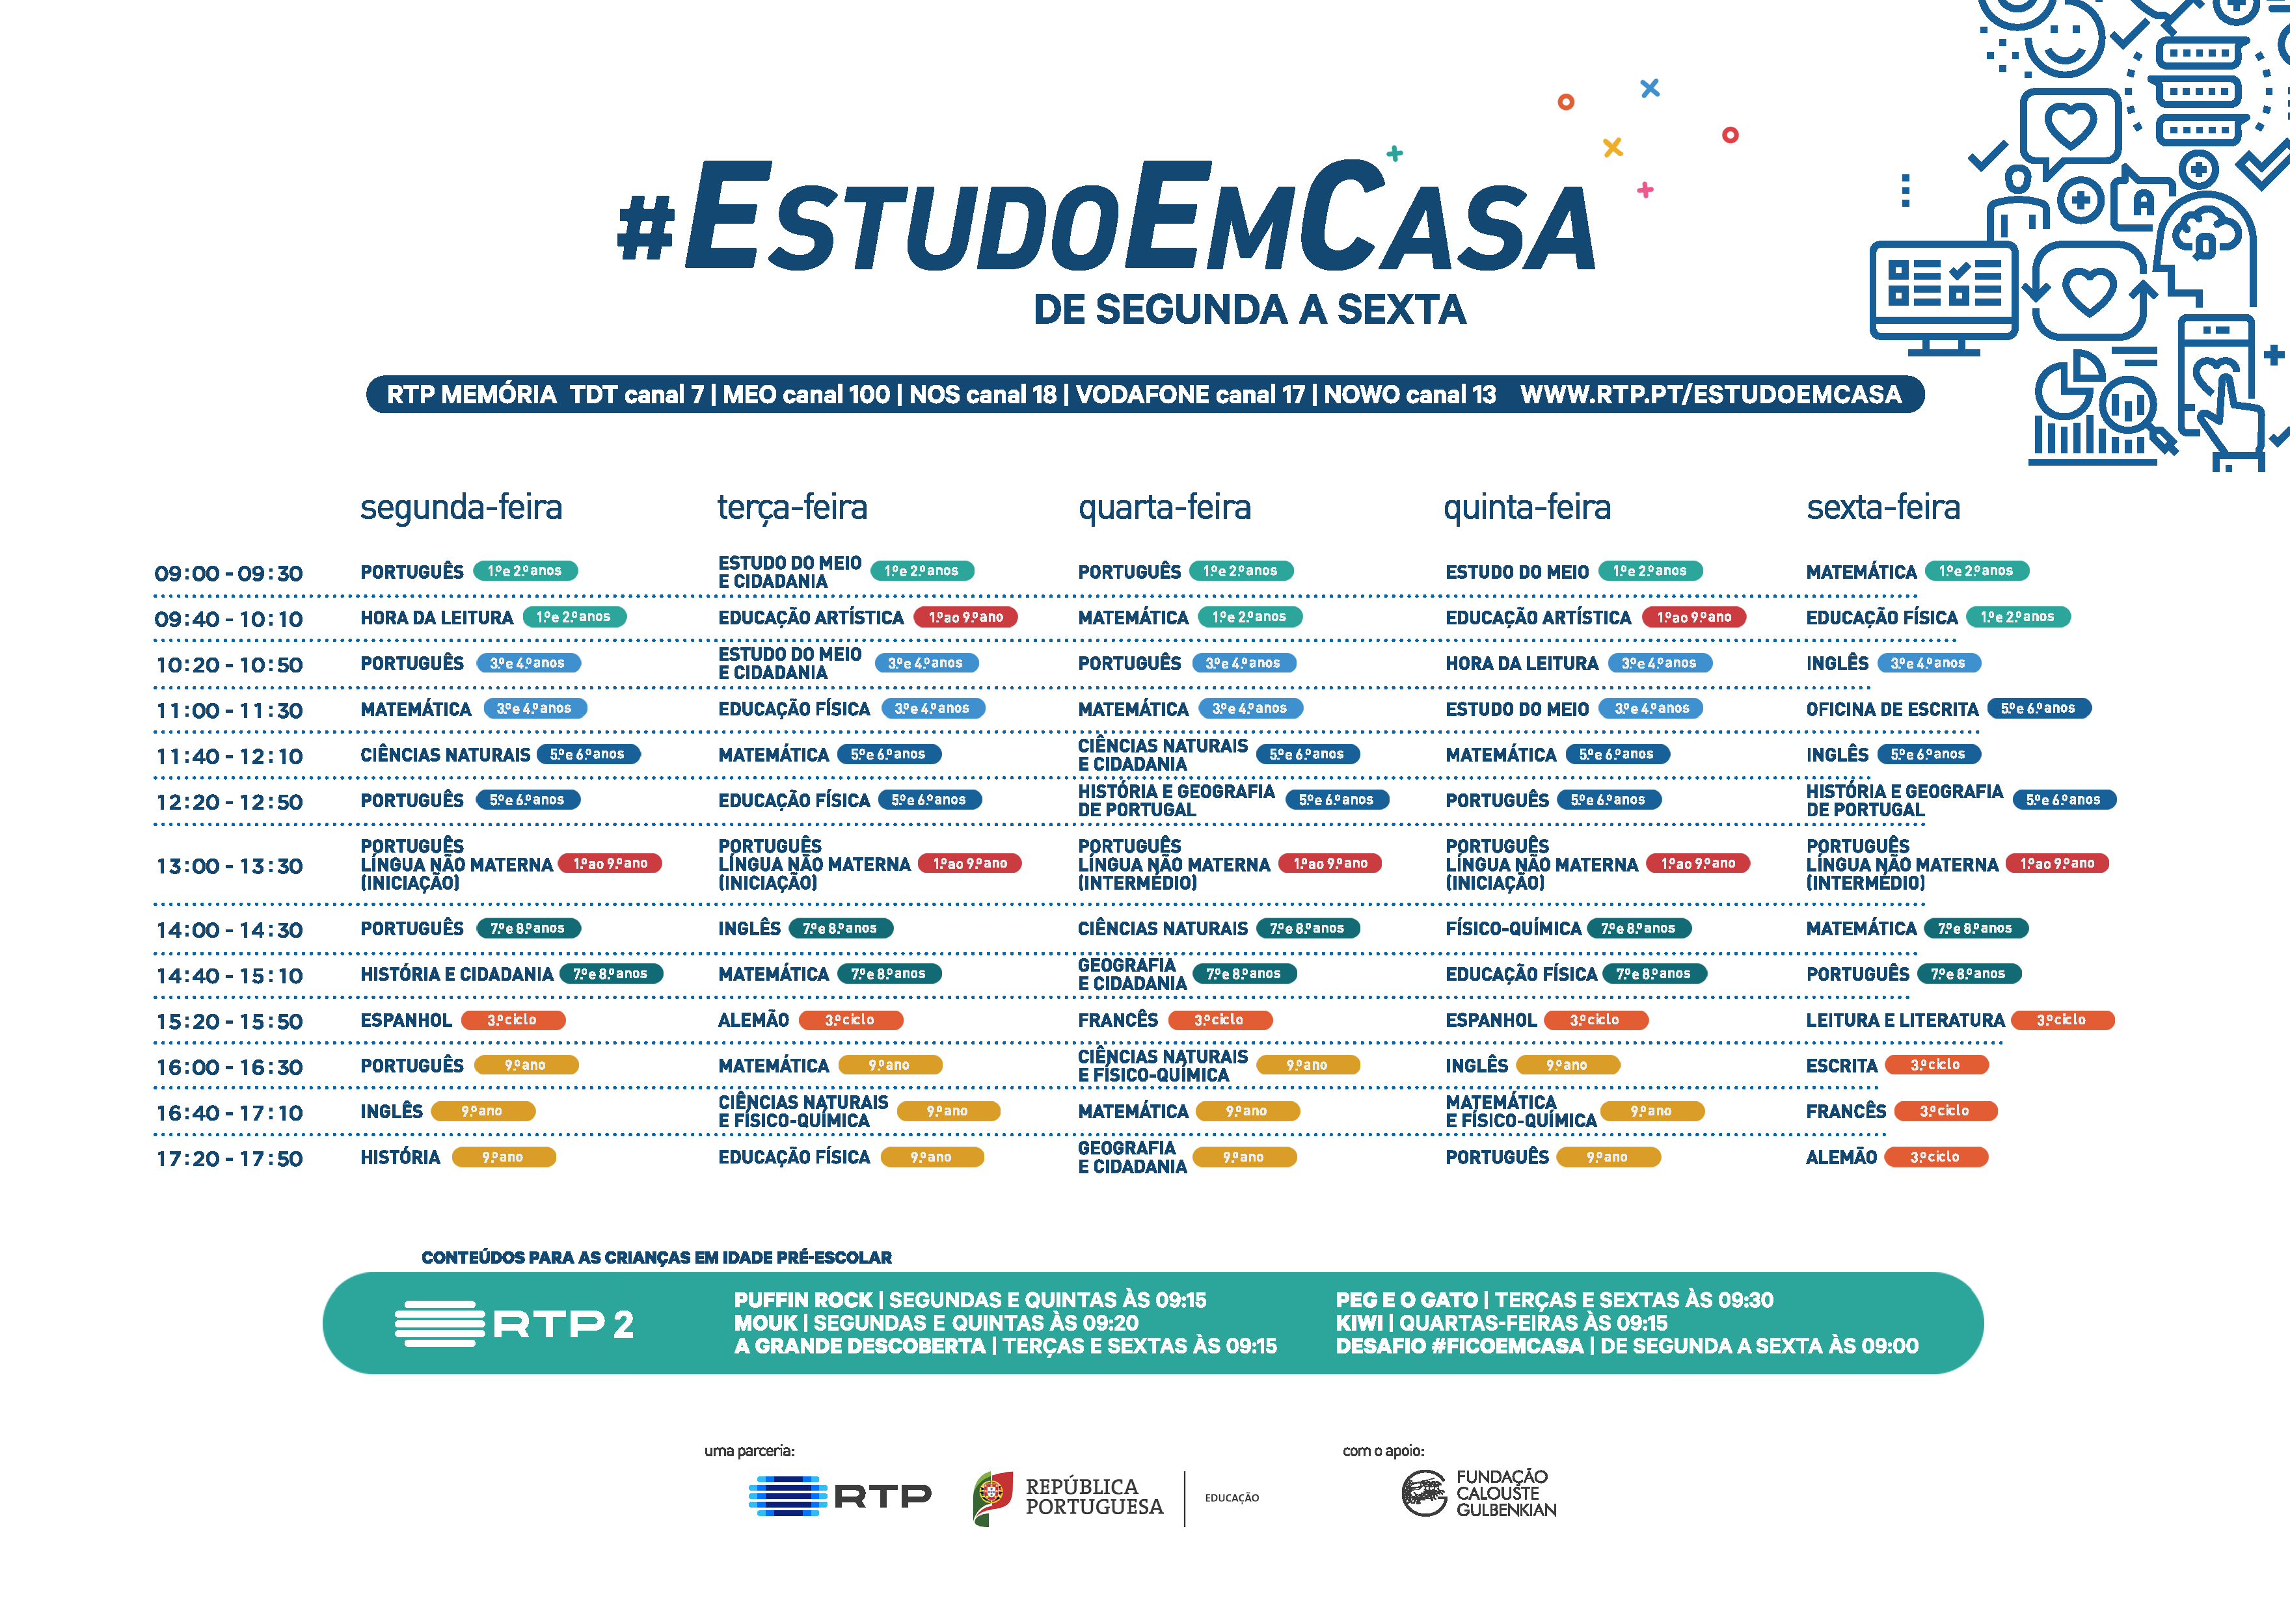 #EstudoEmCasa 20/21